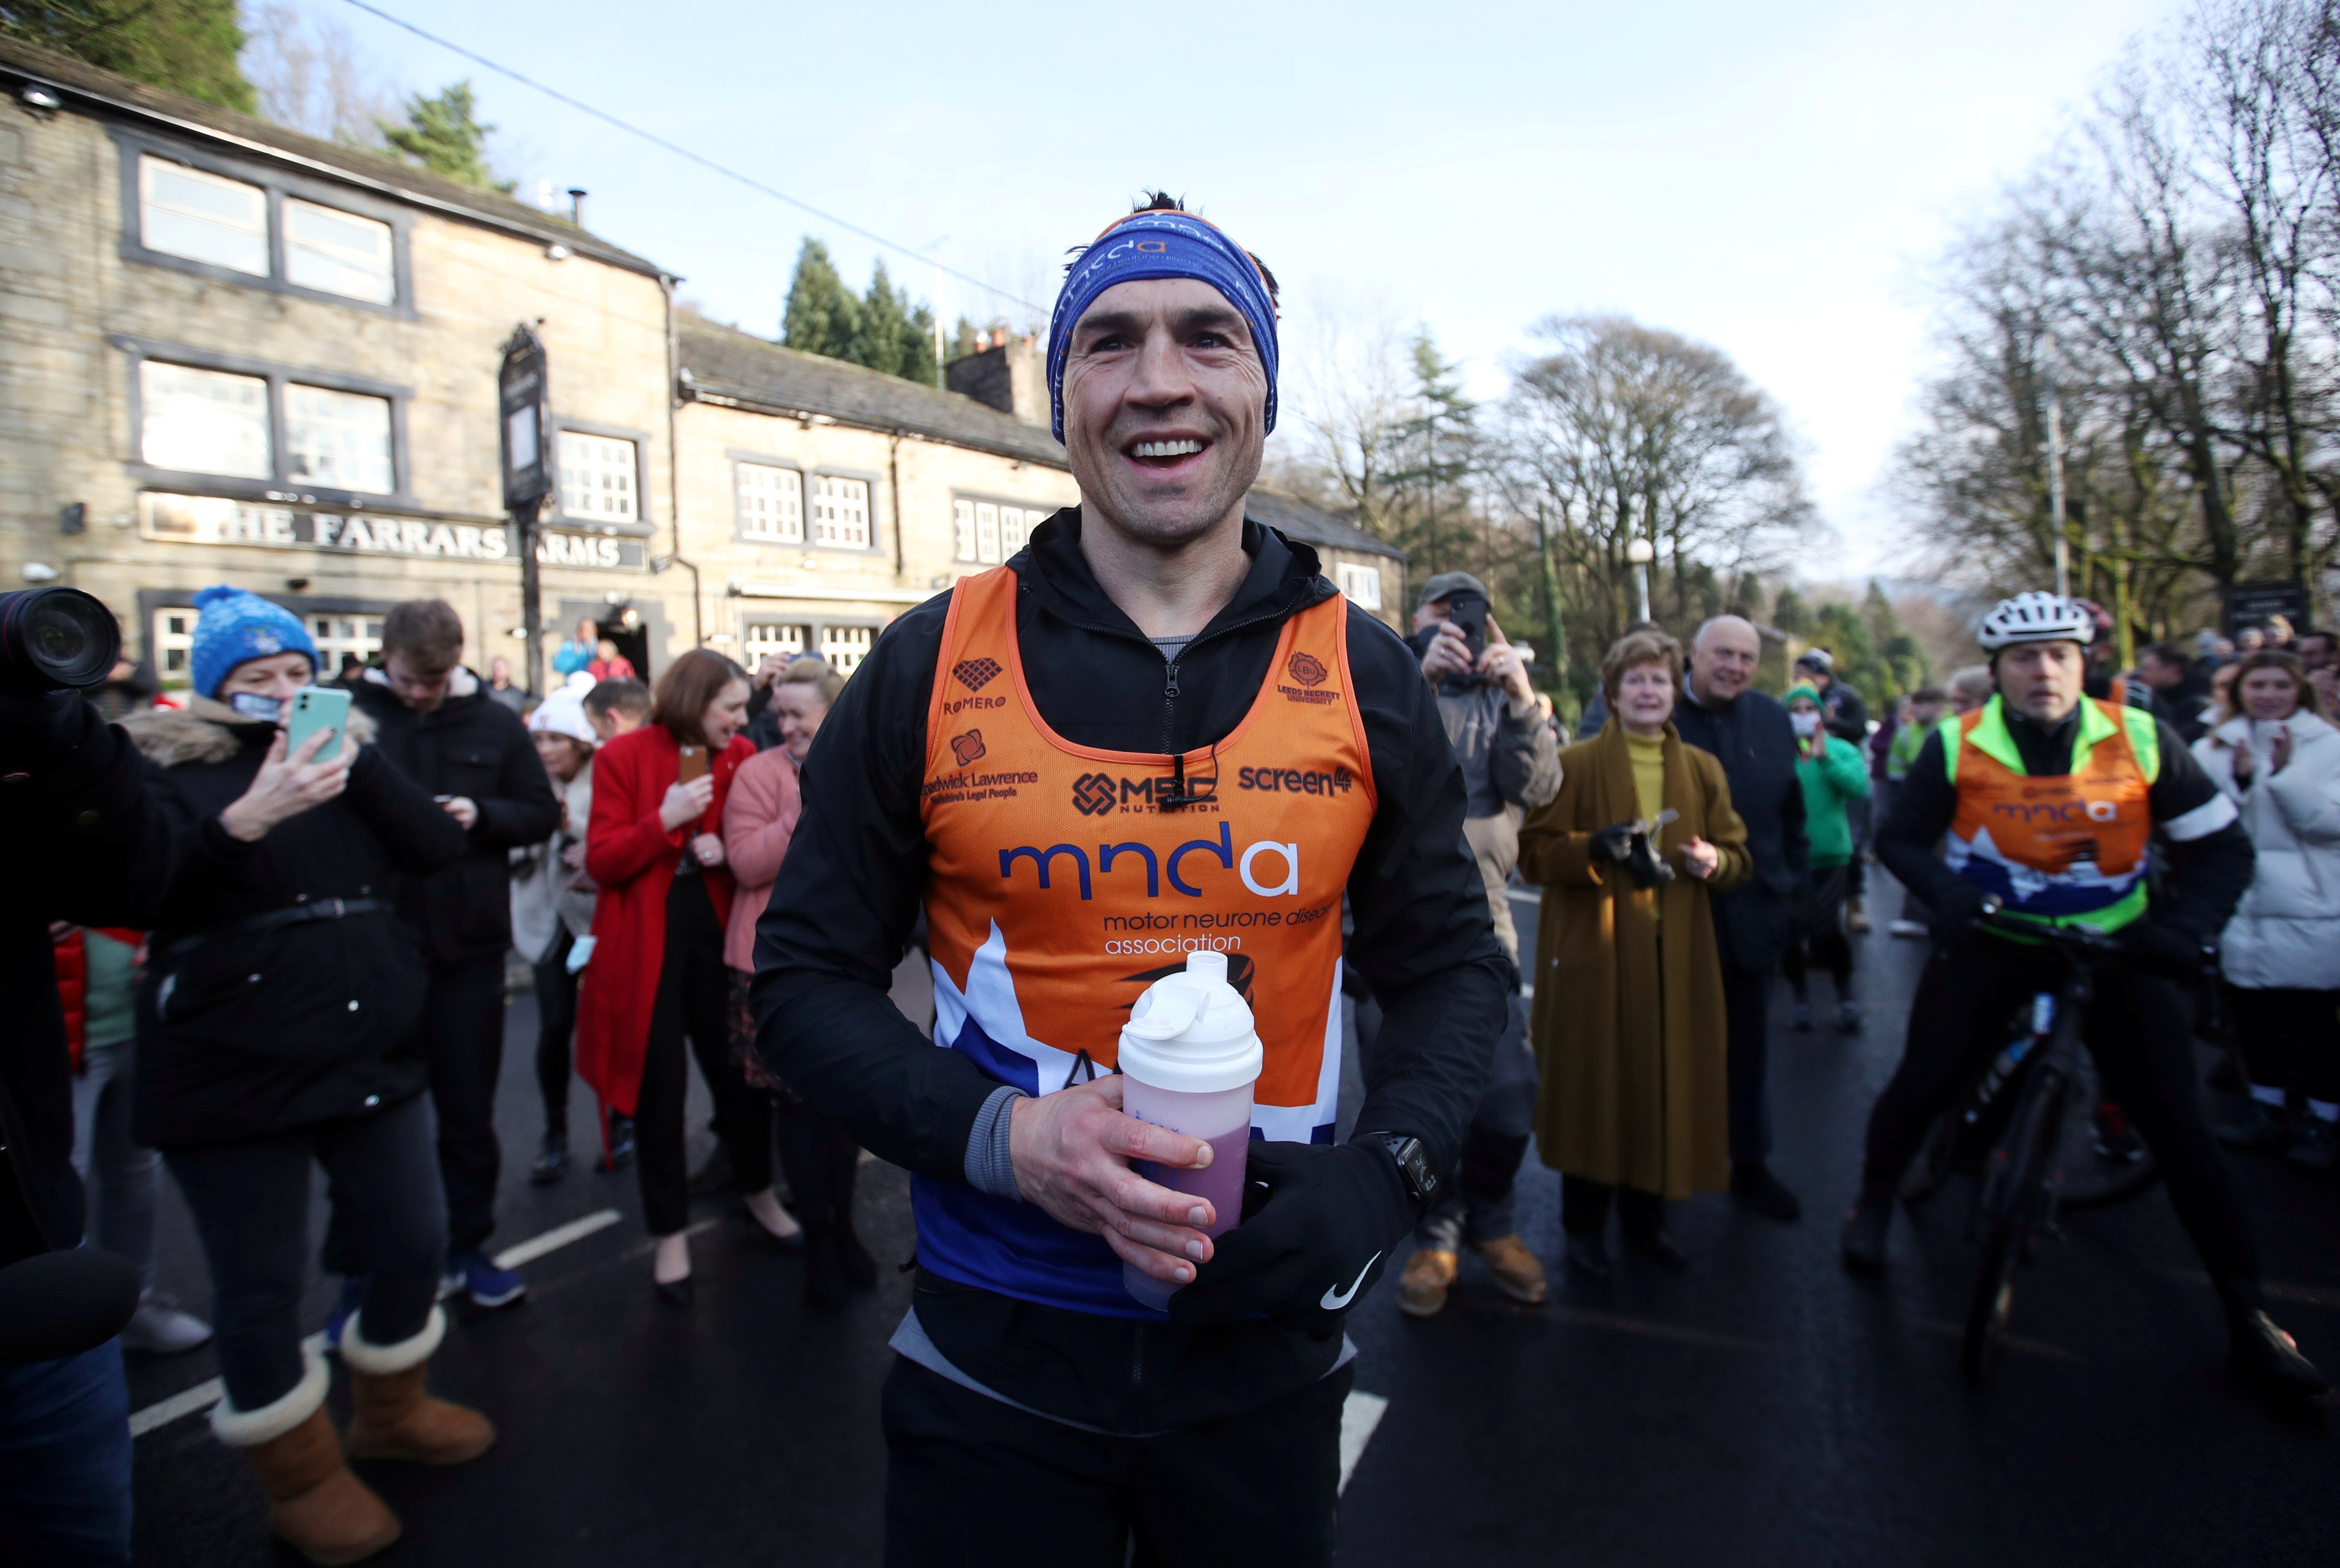 Sinfield raised £2.7m last year by running seven marathons in seven days